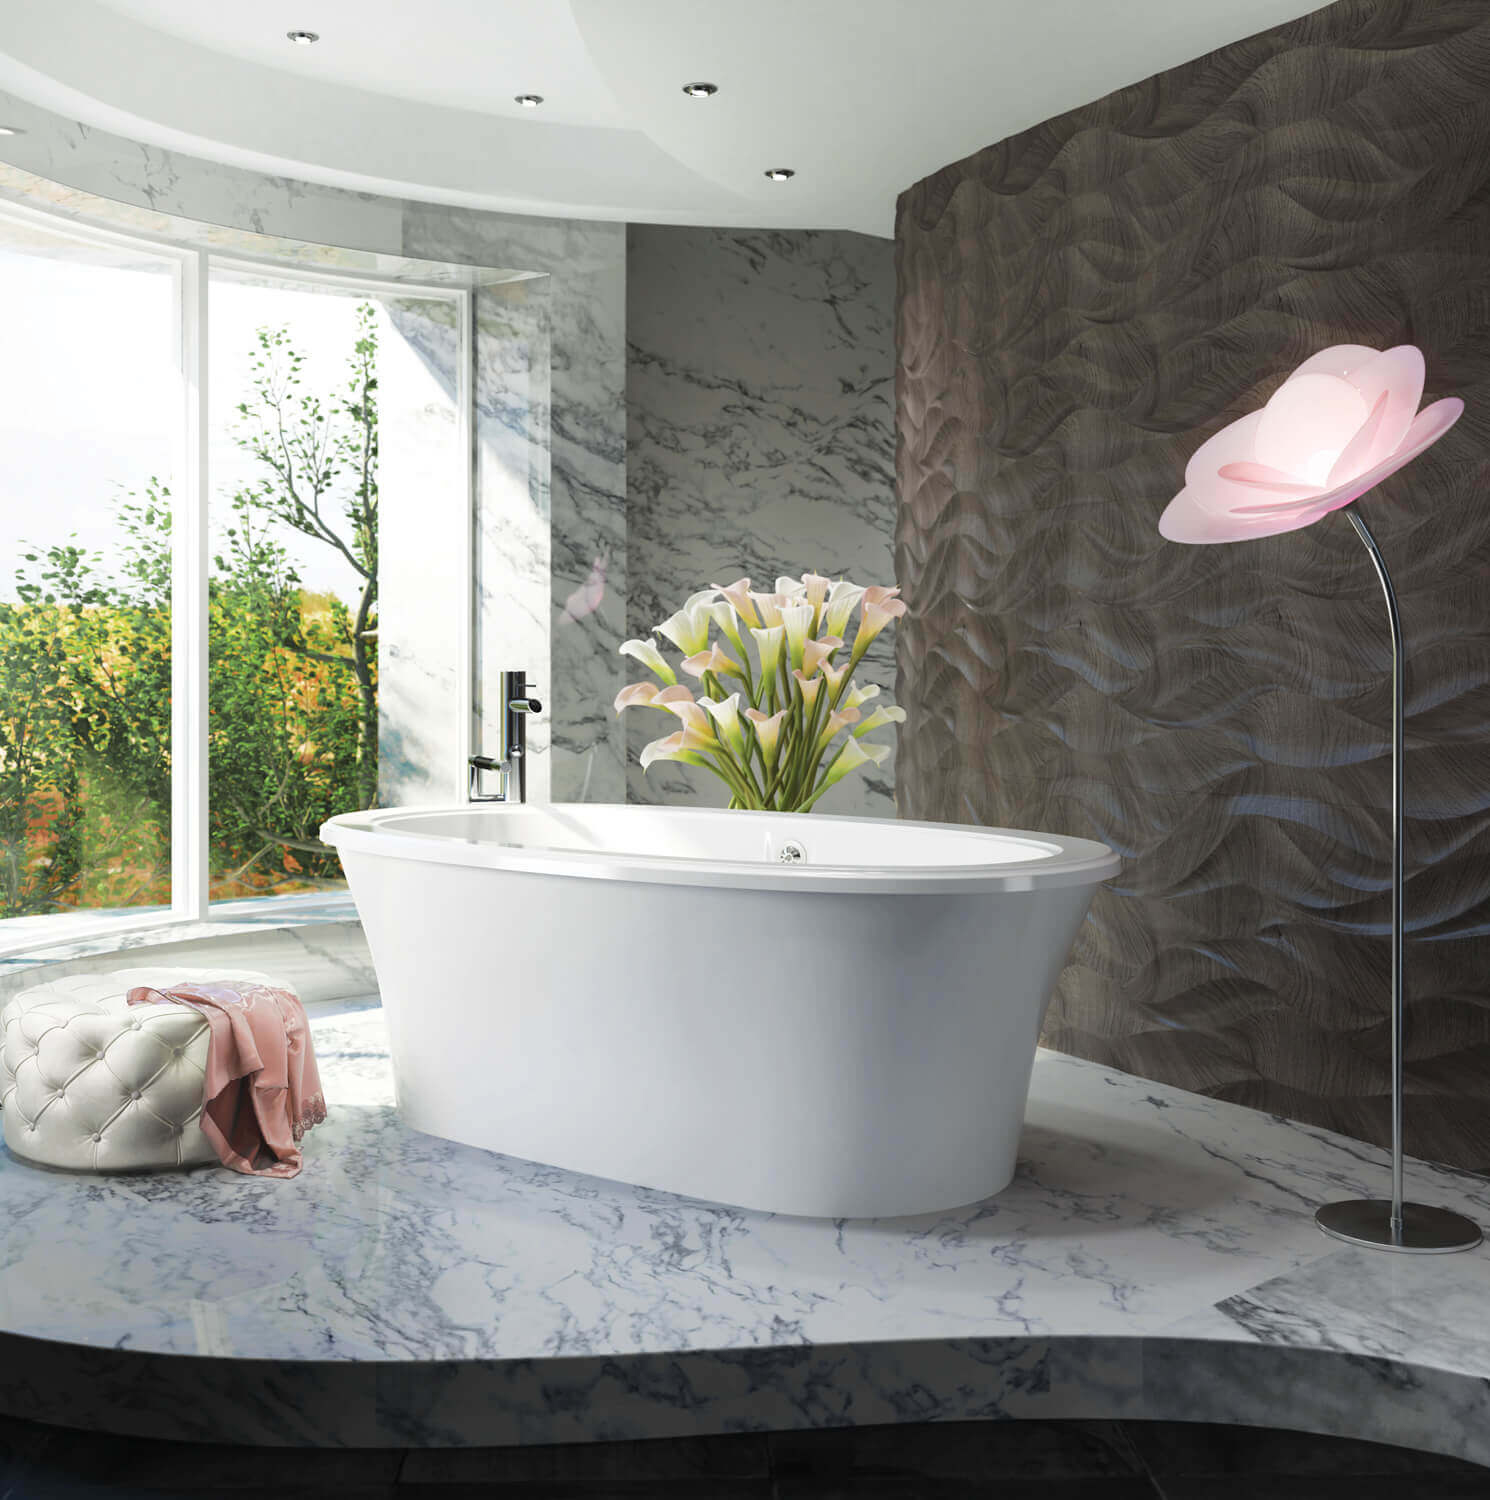 Bainultra Sanos 6636 freestanding air jet bathtub for your modern bathroom